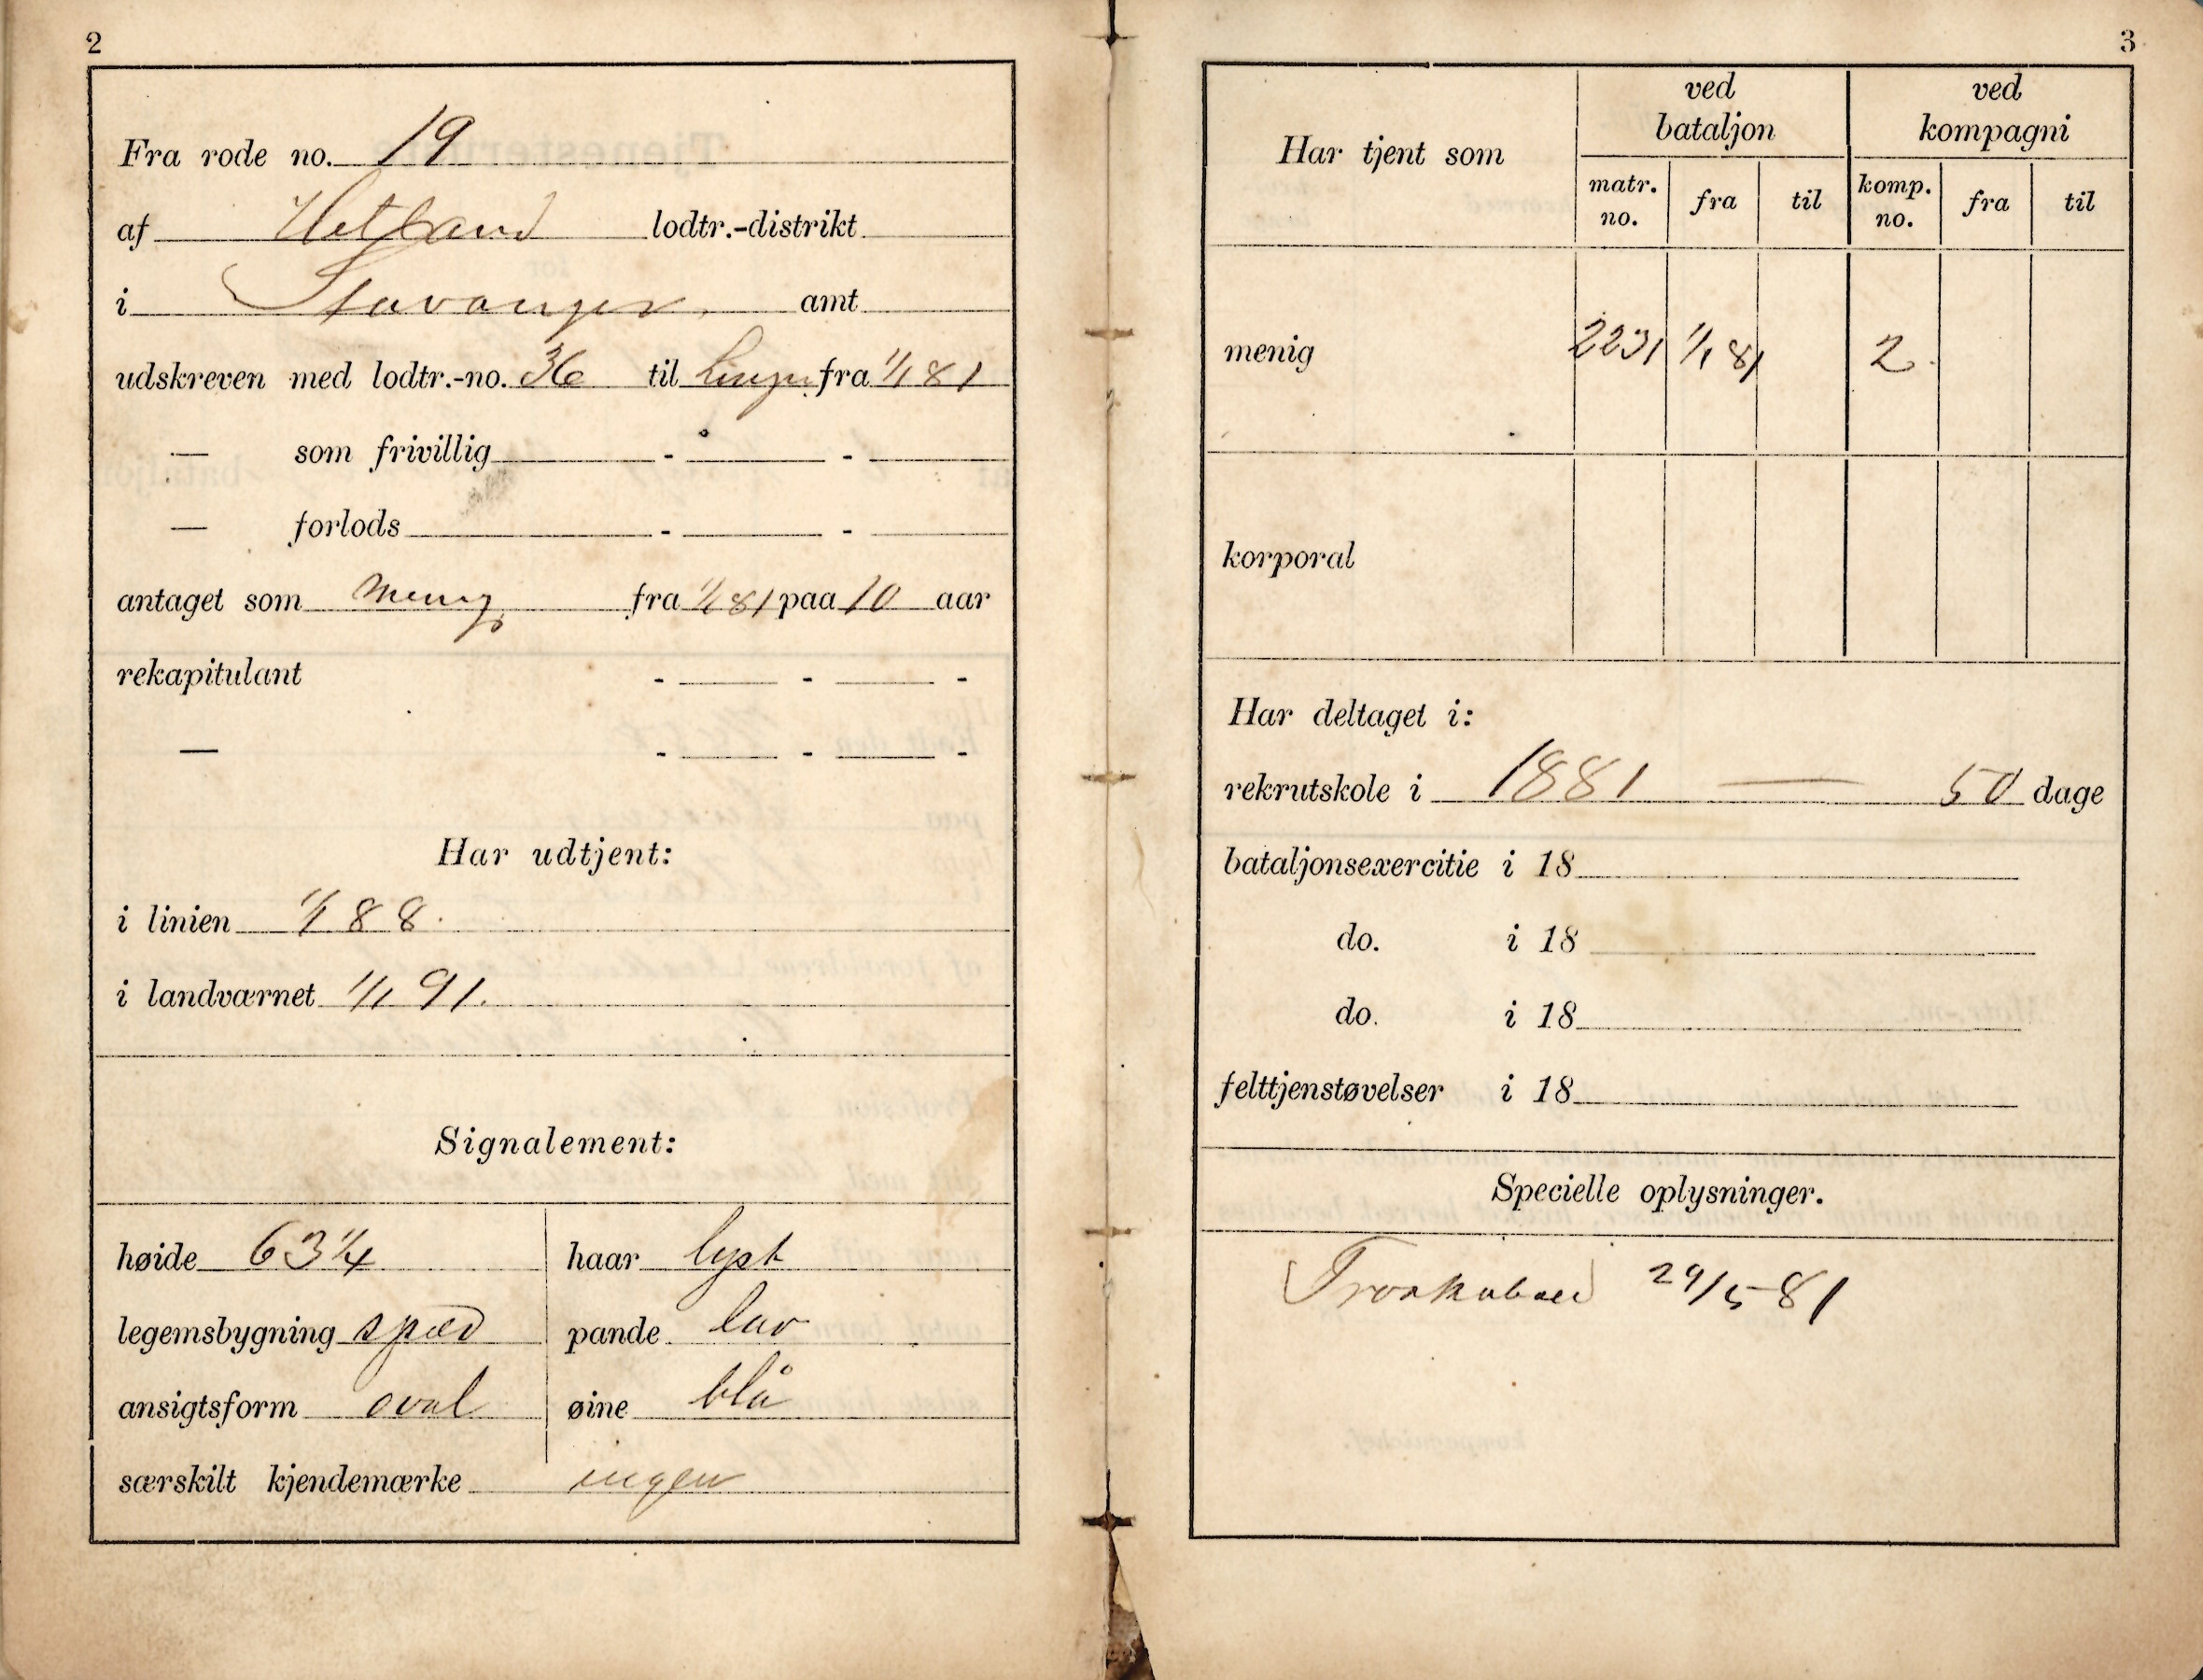 ./doc/reglement/Infanteri1881/Haandbog-Infanteri-1881-26.jpg